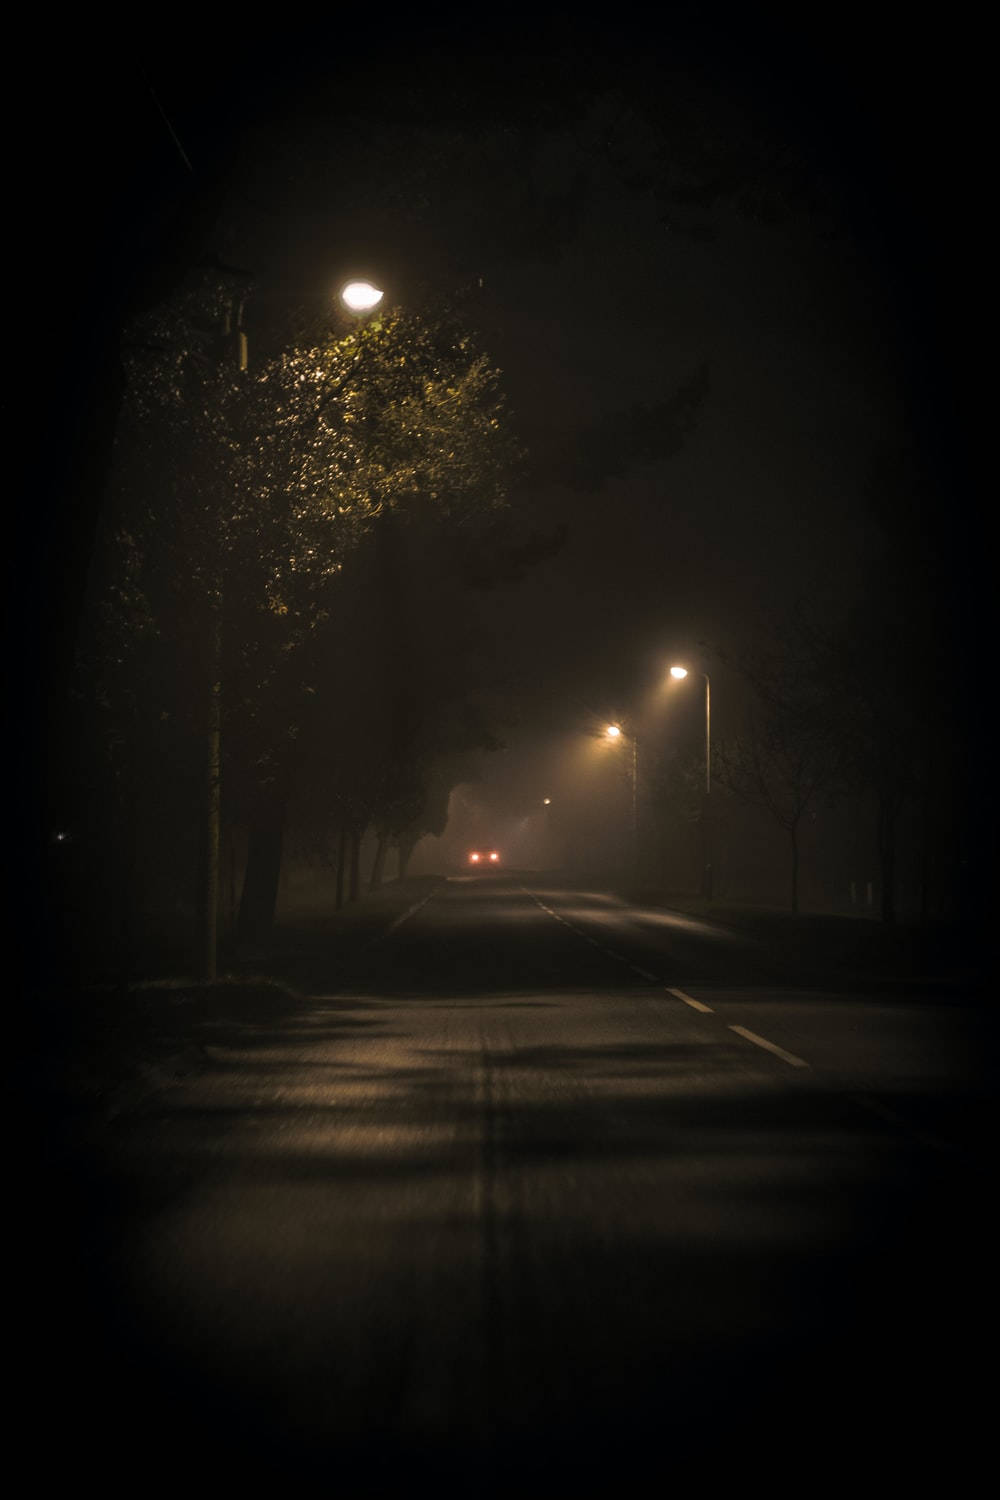 Dark Night Road In Sepia Colors Background